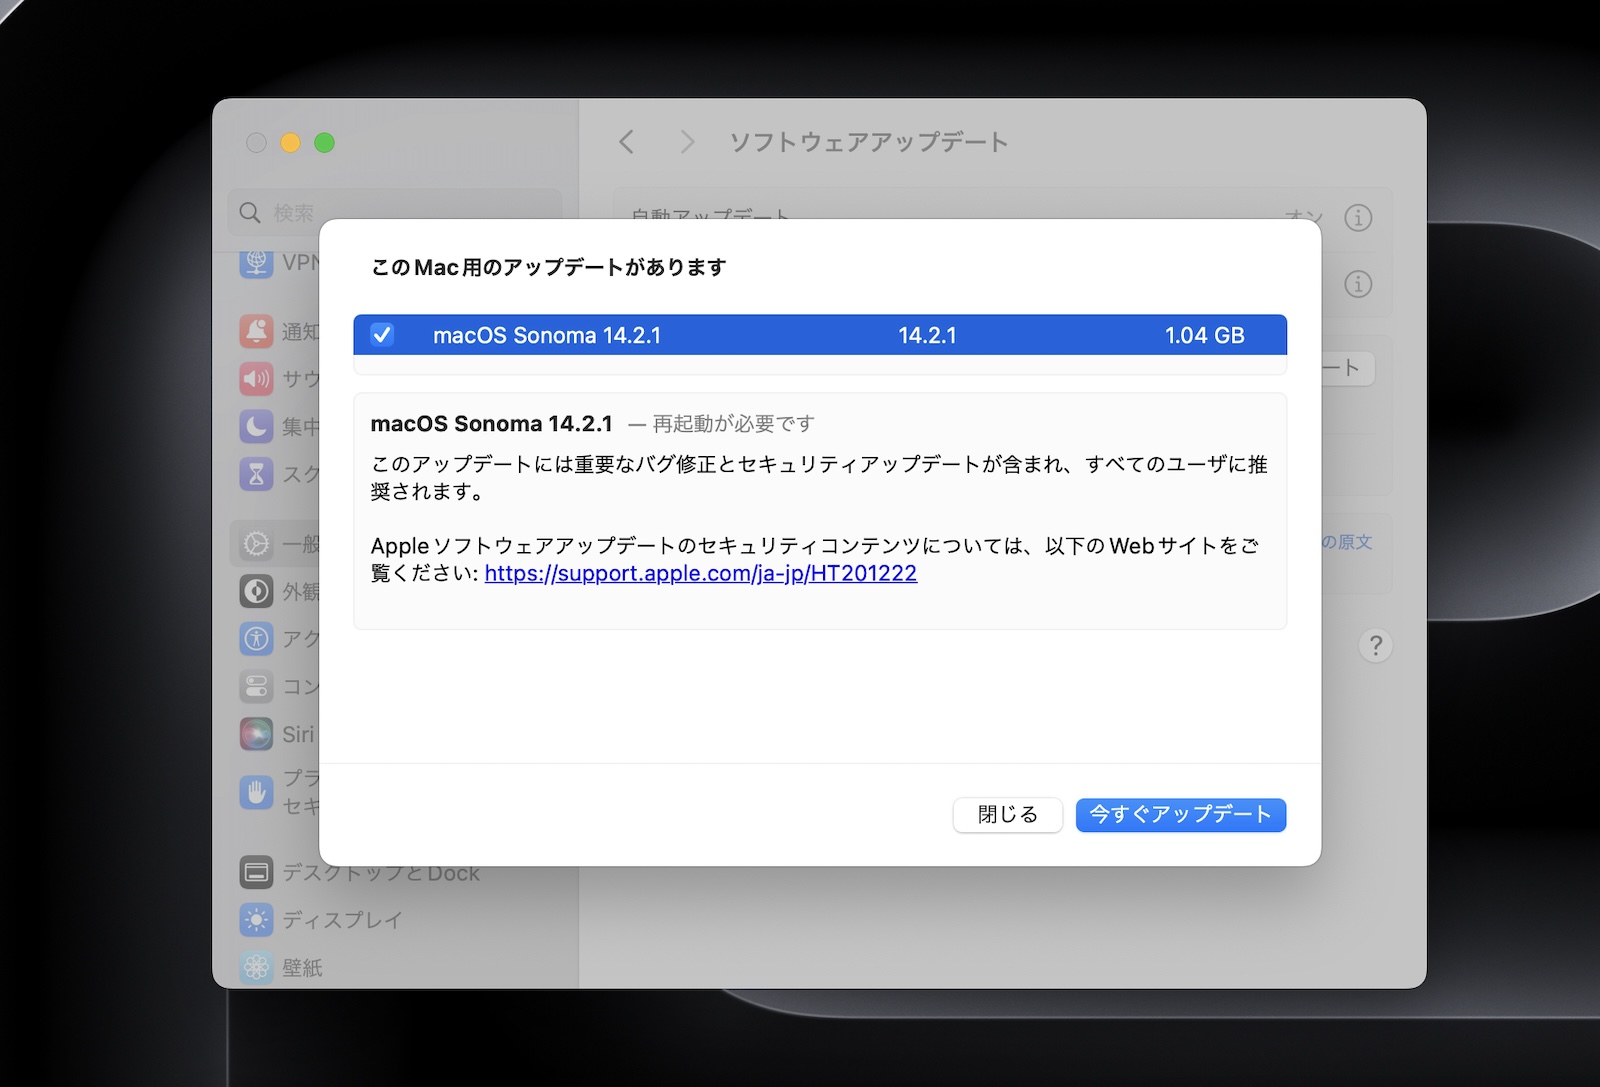 macOS-Sonoma-14_2_1-2.jpg